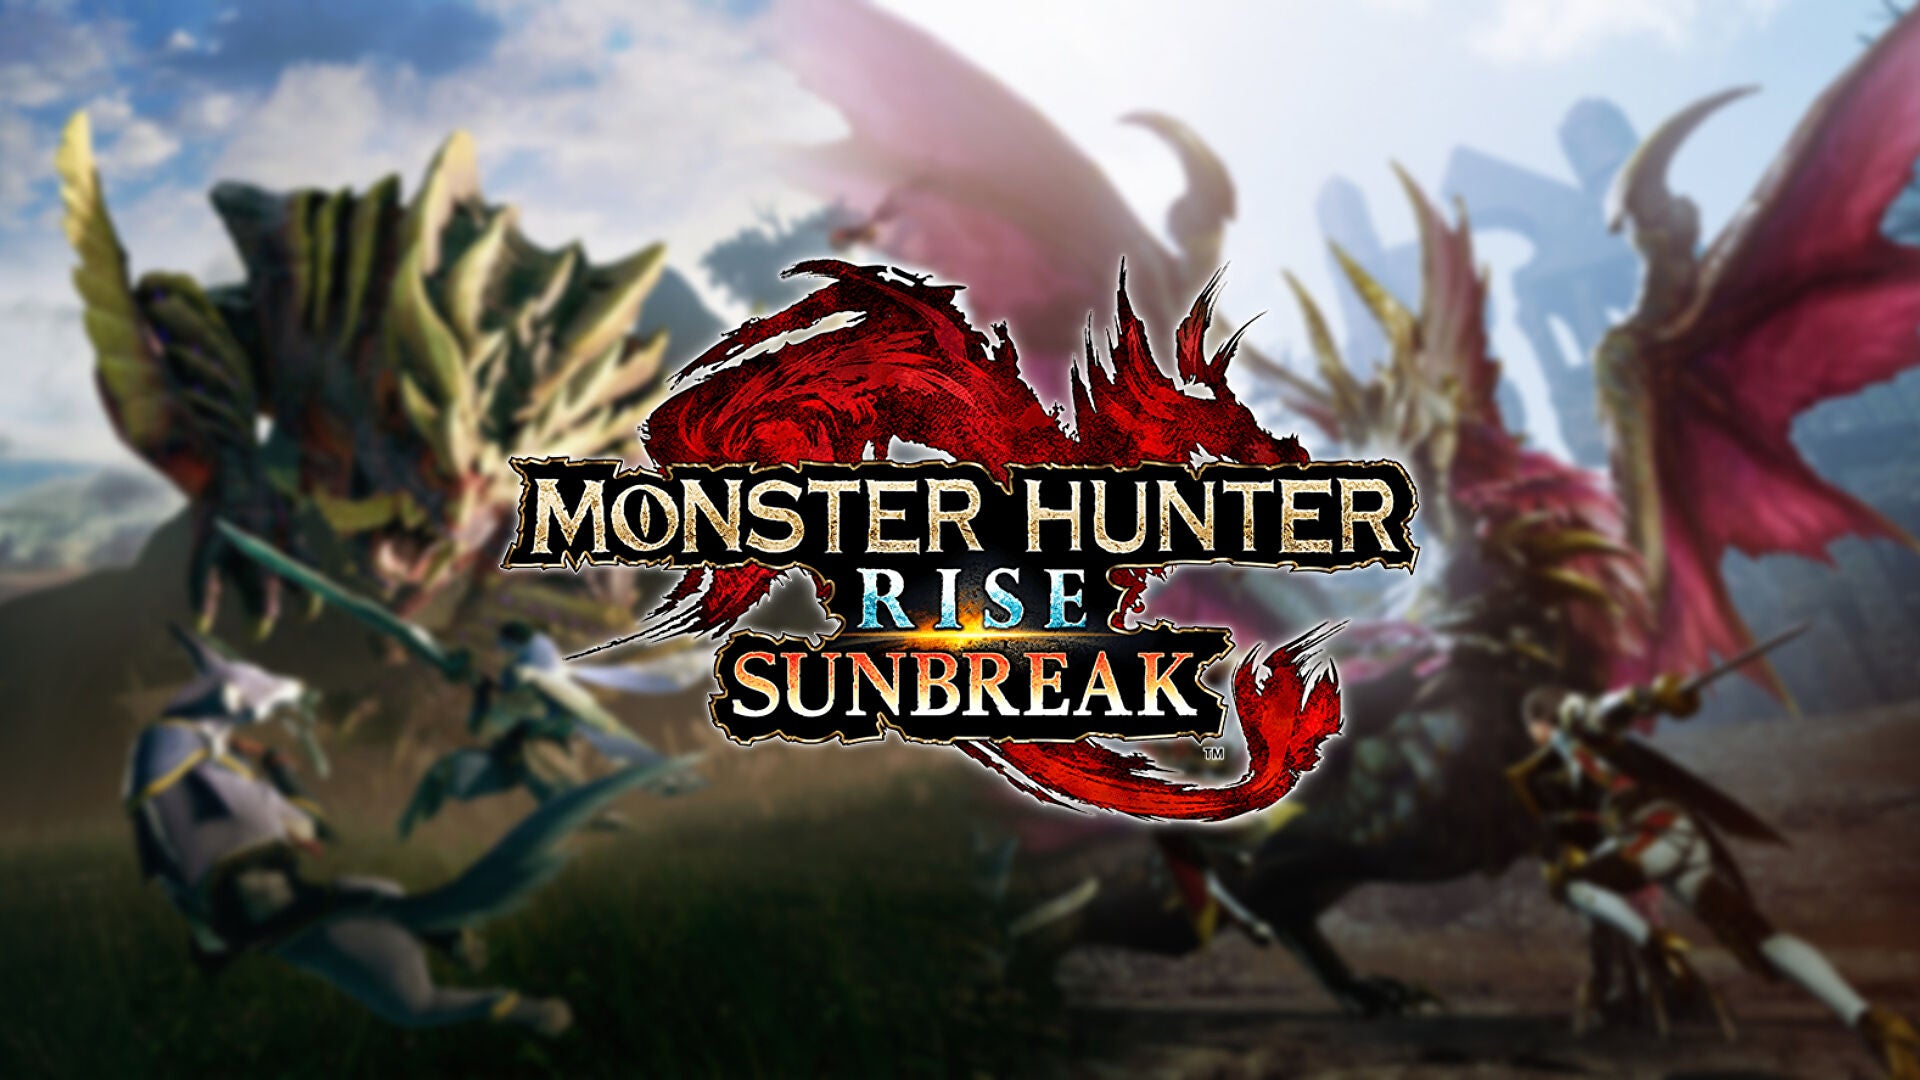 Image for Monster Hunter Rise: Sunbreak is brutal but balanced